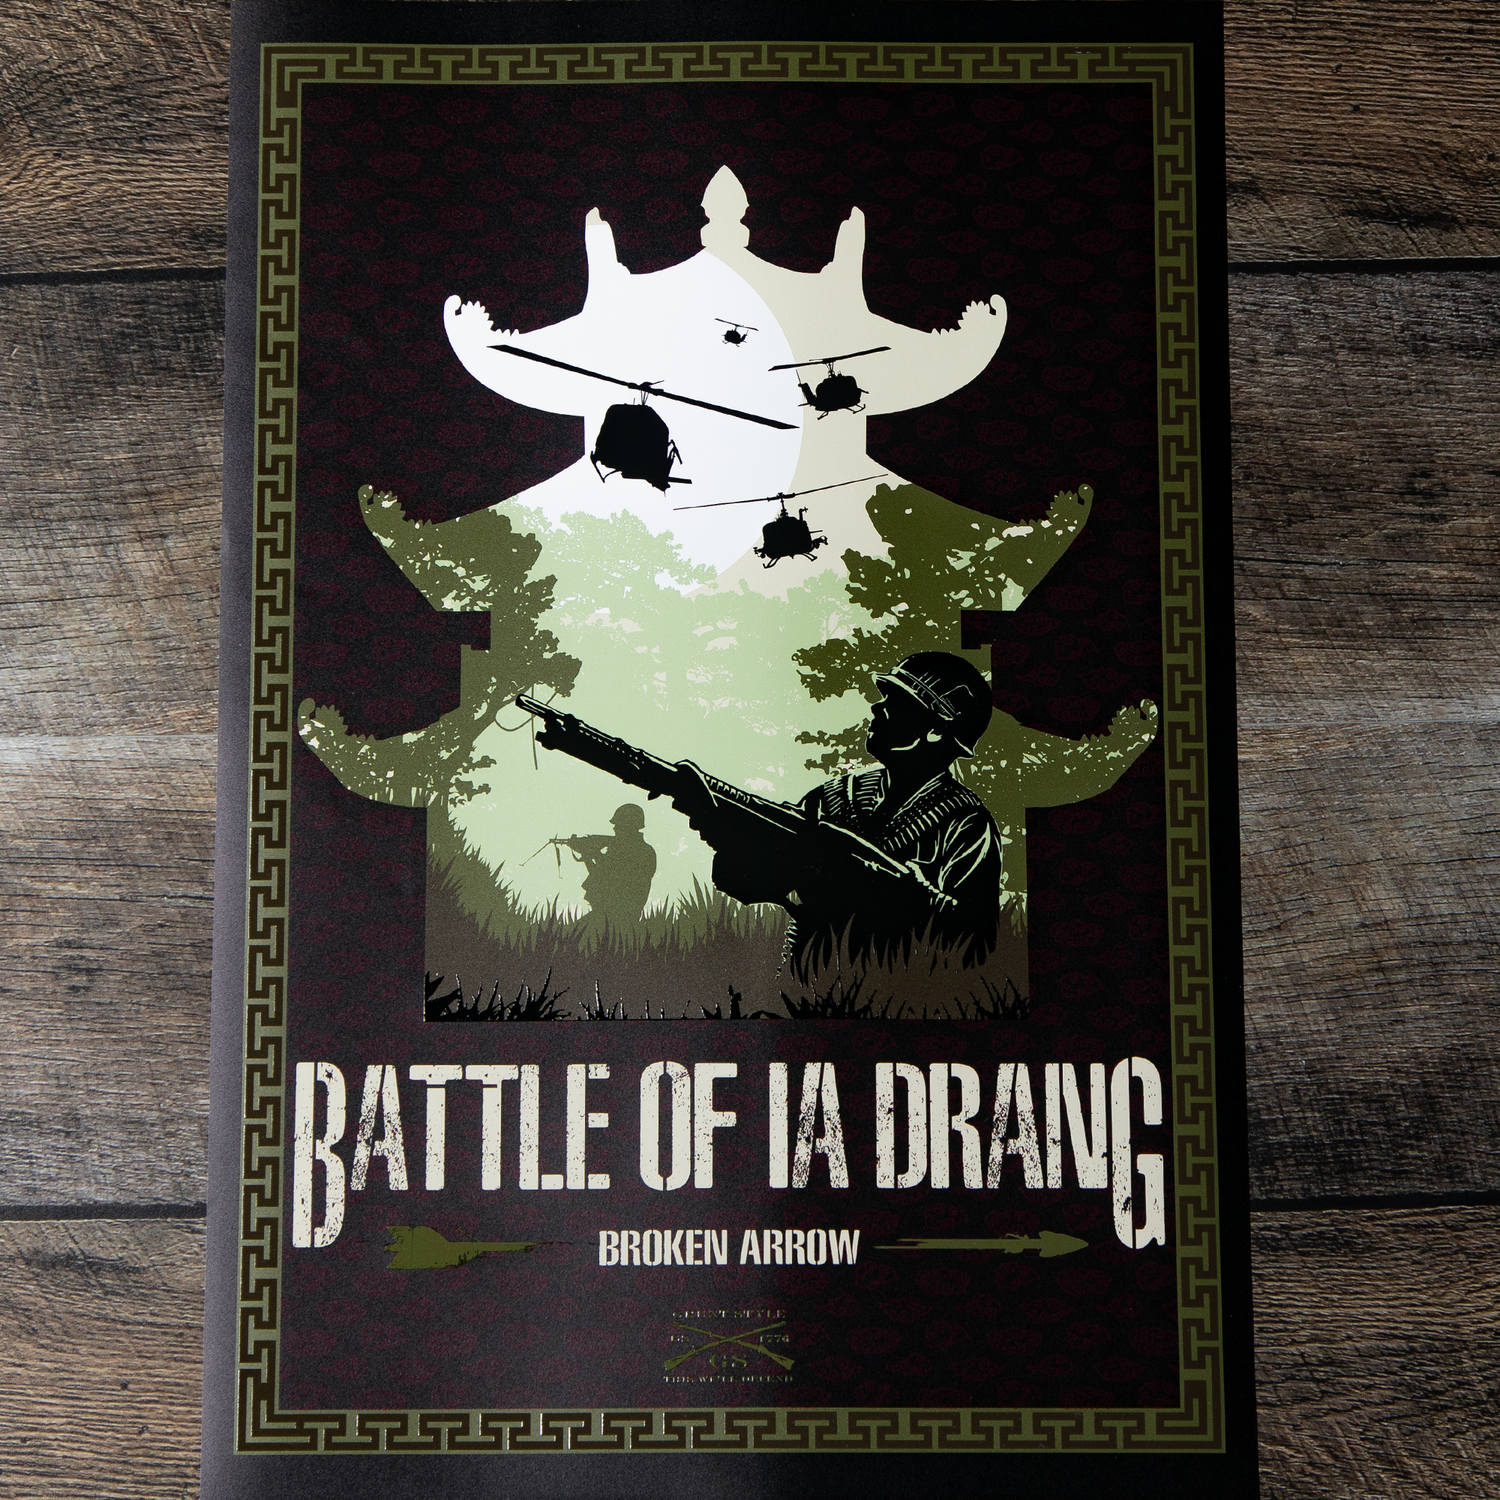 Battle of IA Drang Poster